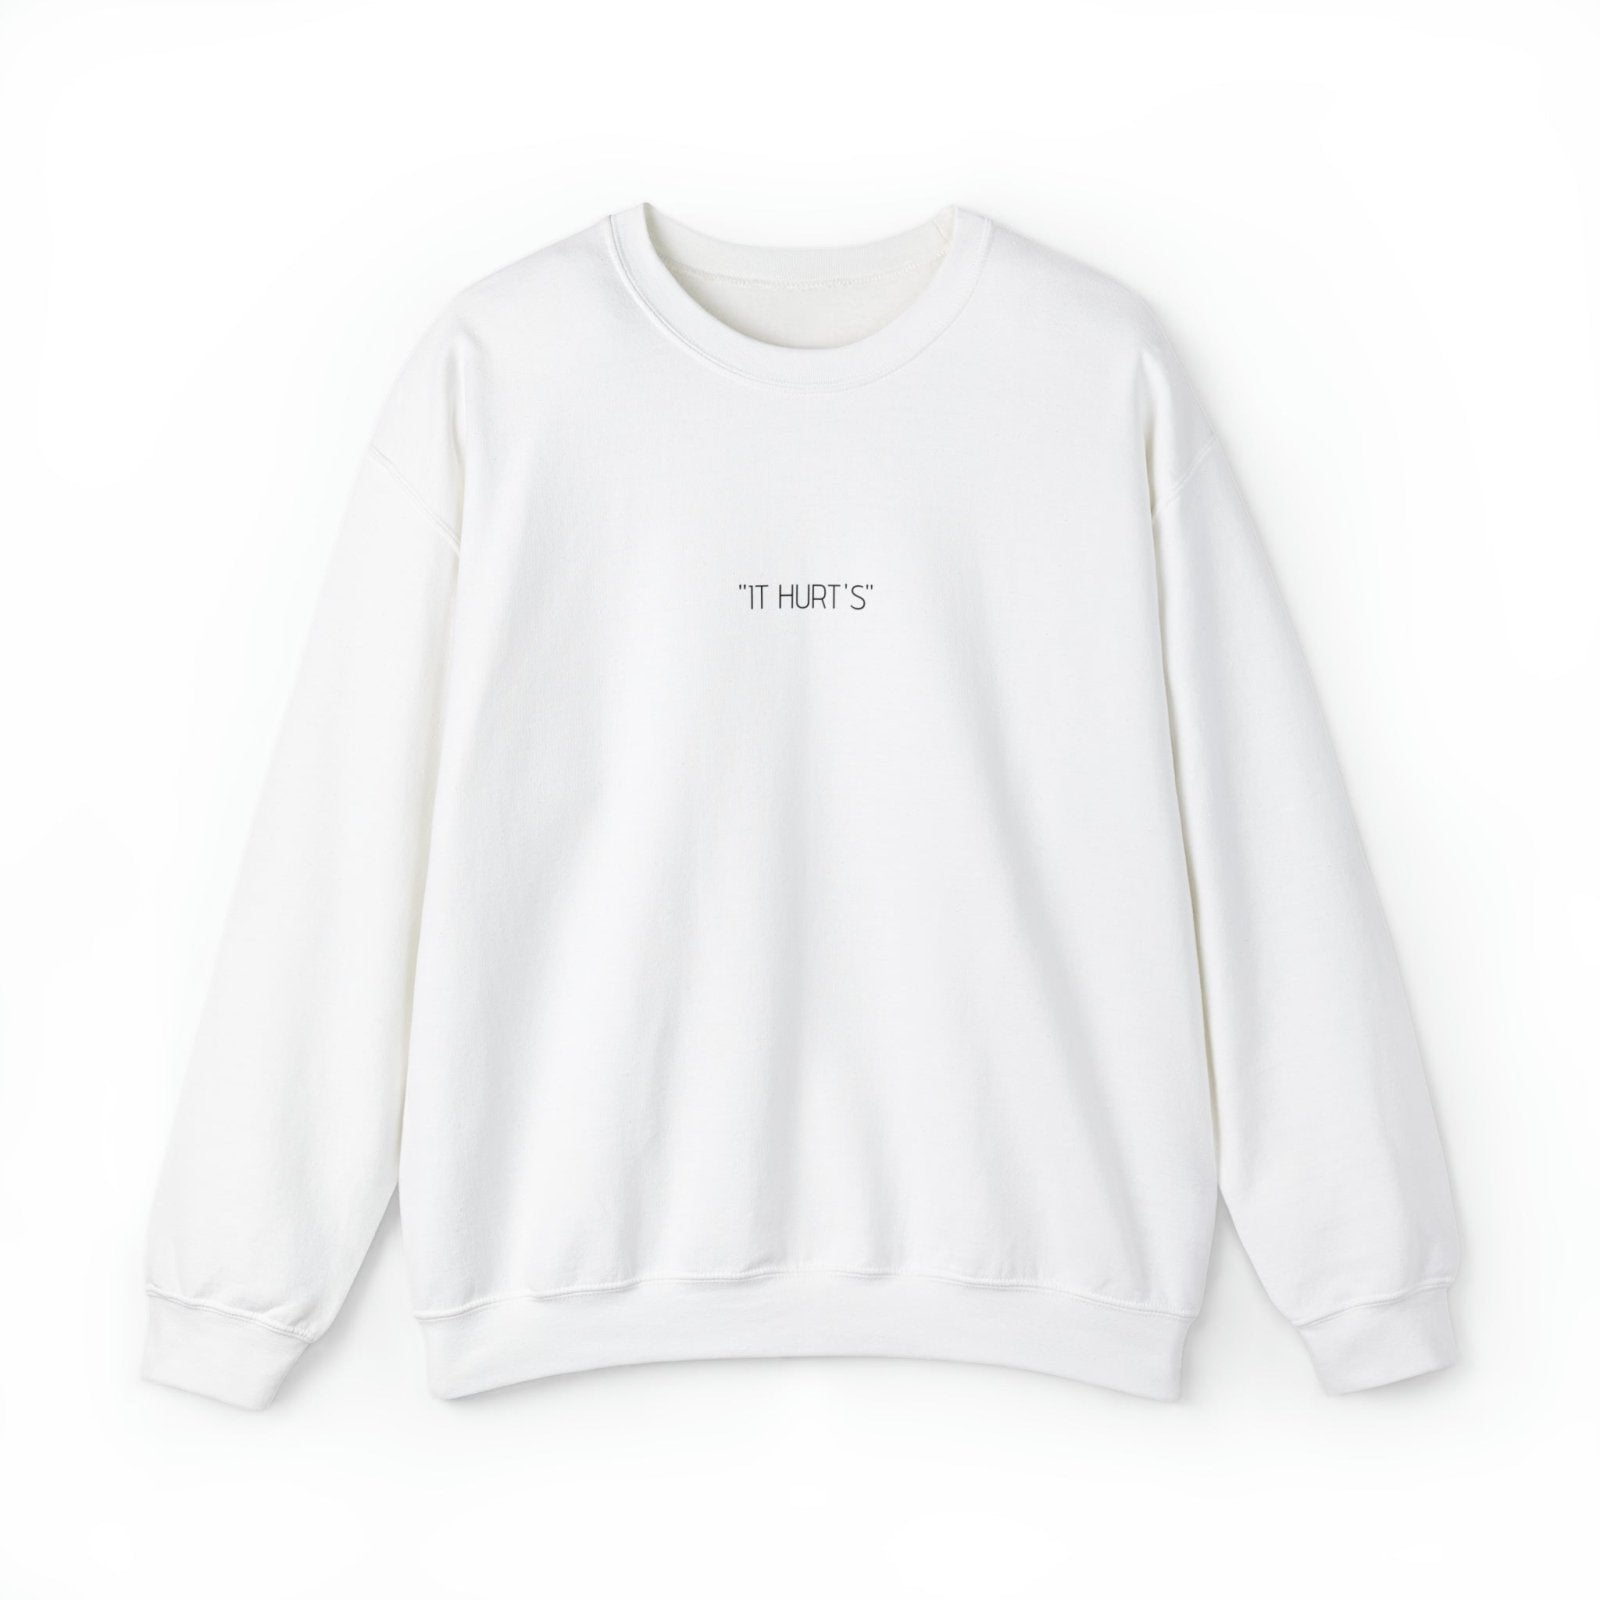 "IT HURT'S" Motivational cotton sweatshirt - Dowding